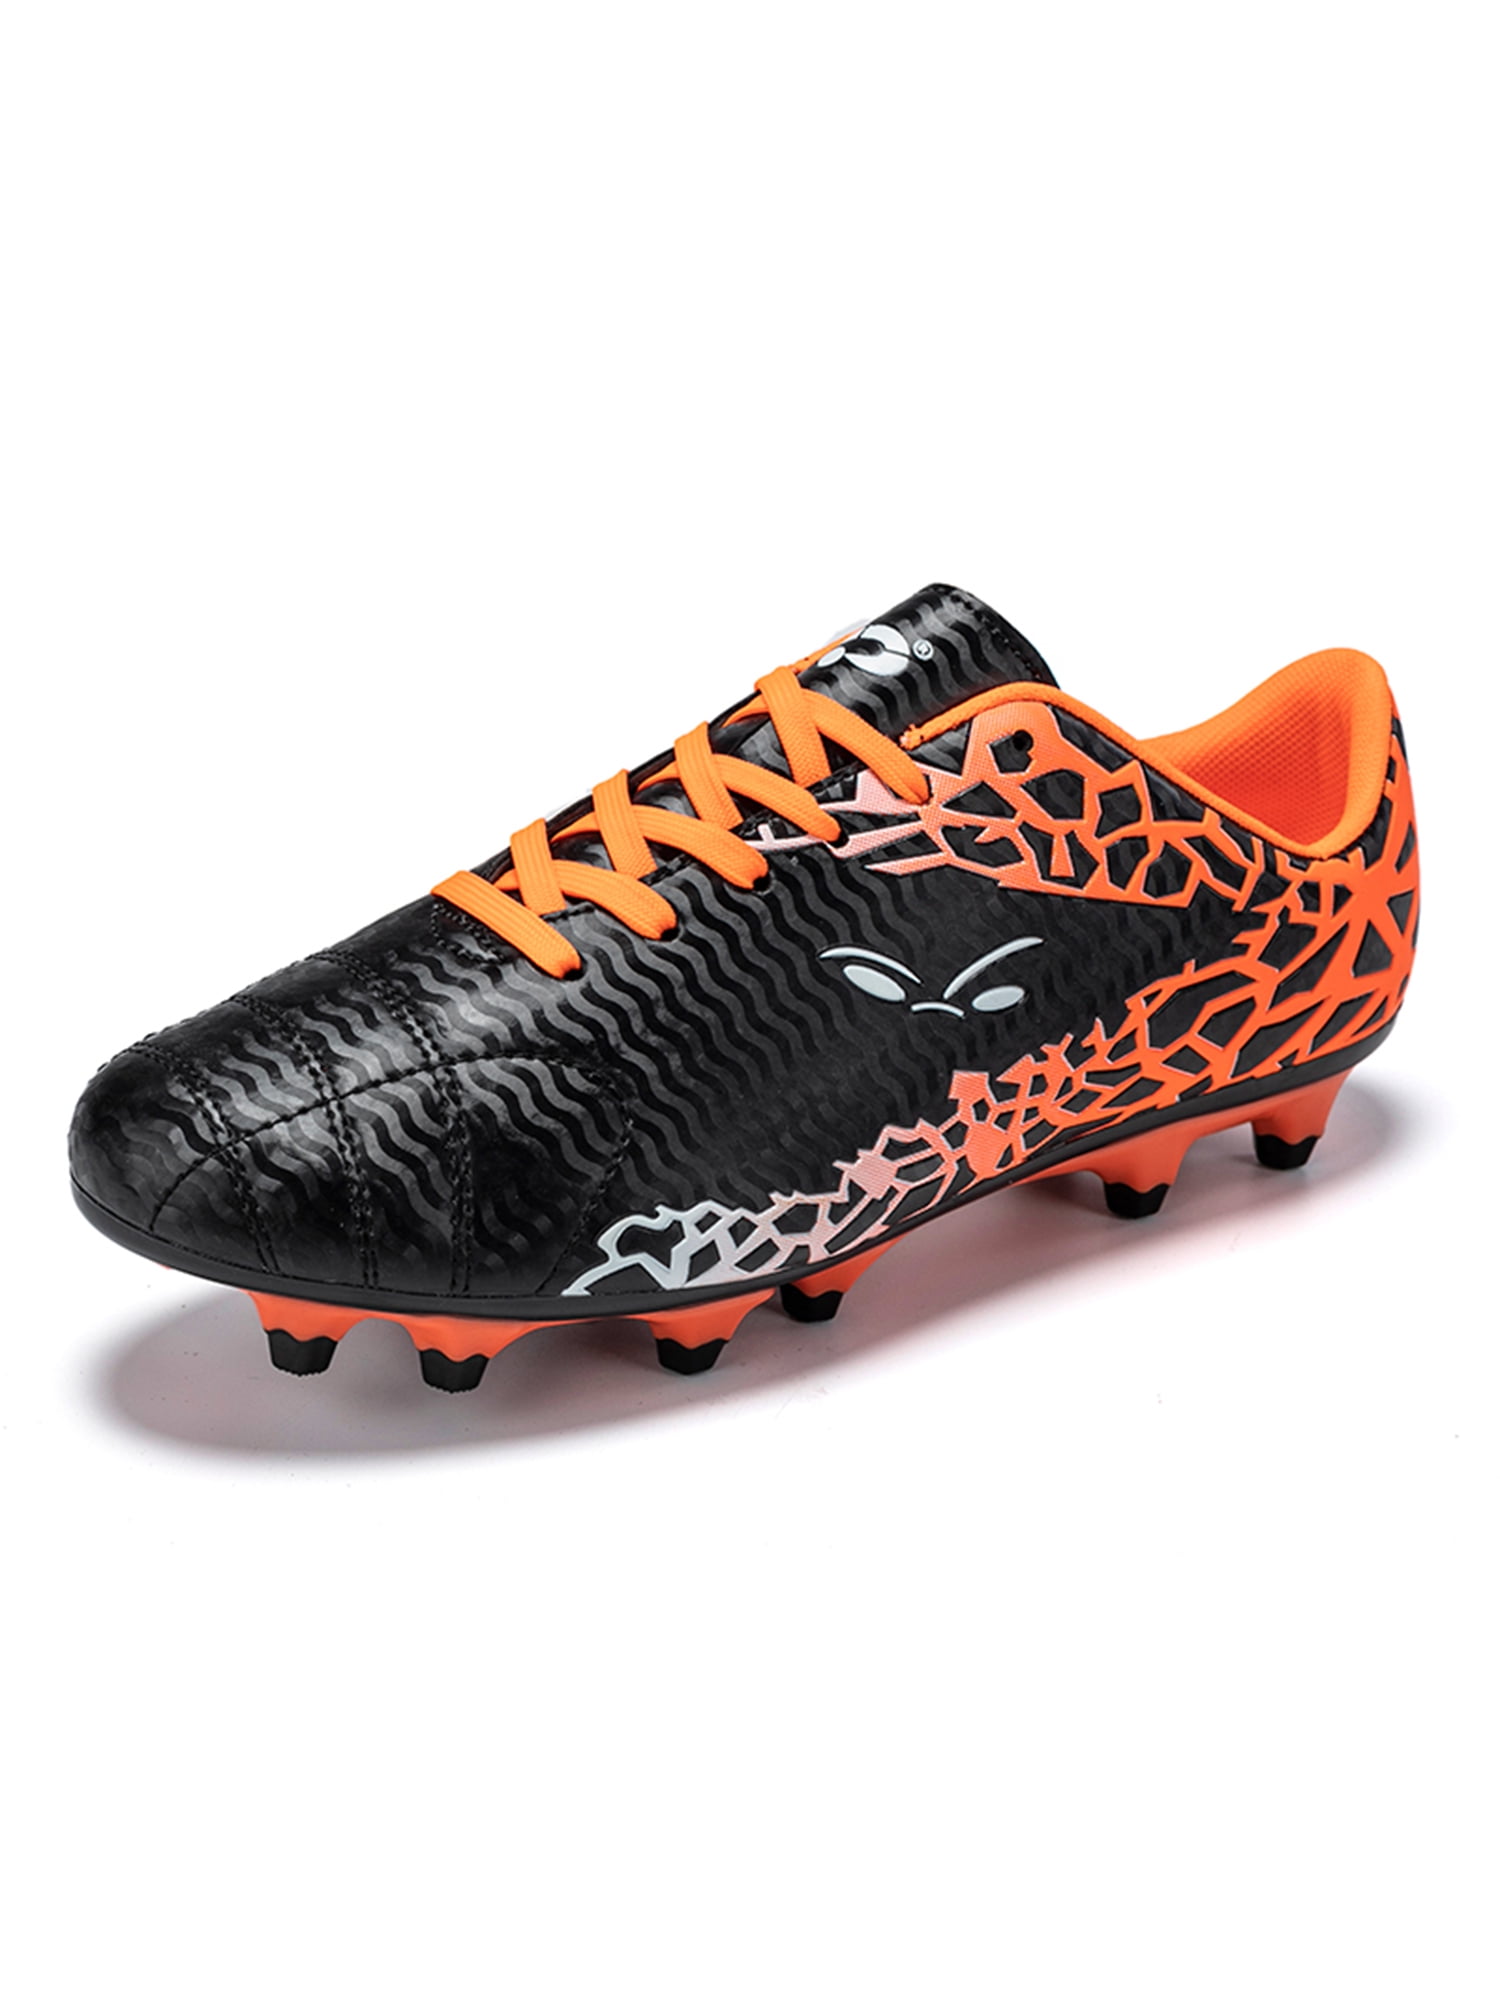 Nivia Football Shoes : Buy Nivia Airstrike Football Shoes for Men  Online|Nykaa Fashion